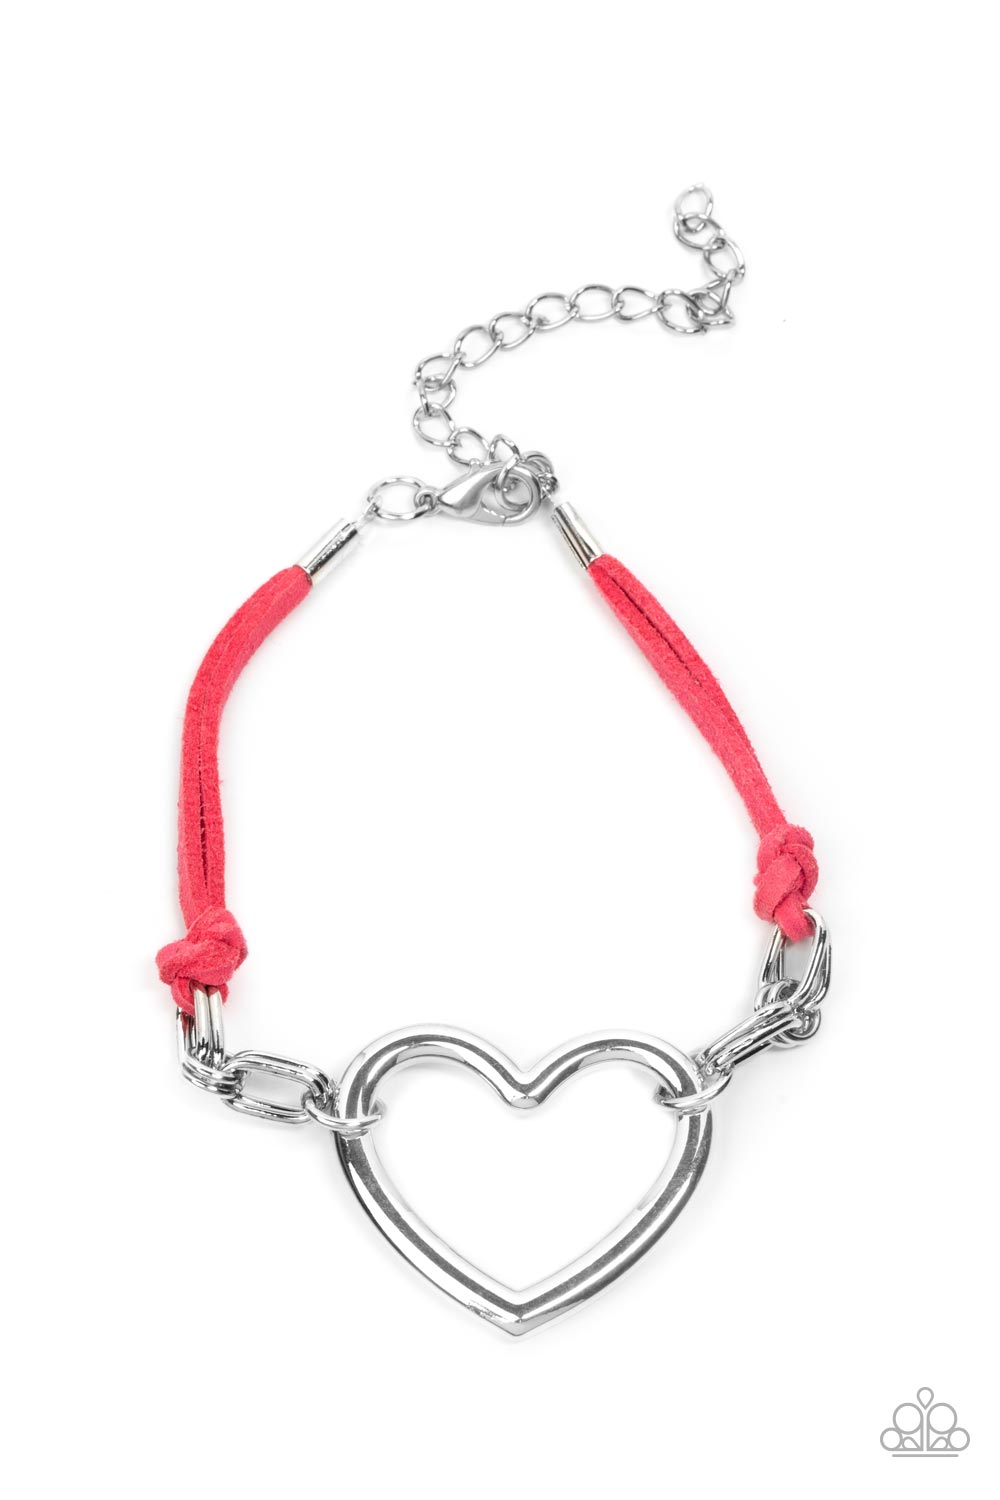 Flirty Flavour - Pink (Heart) Bracelet freeshipping - JewLz4u Gemstone Gallery